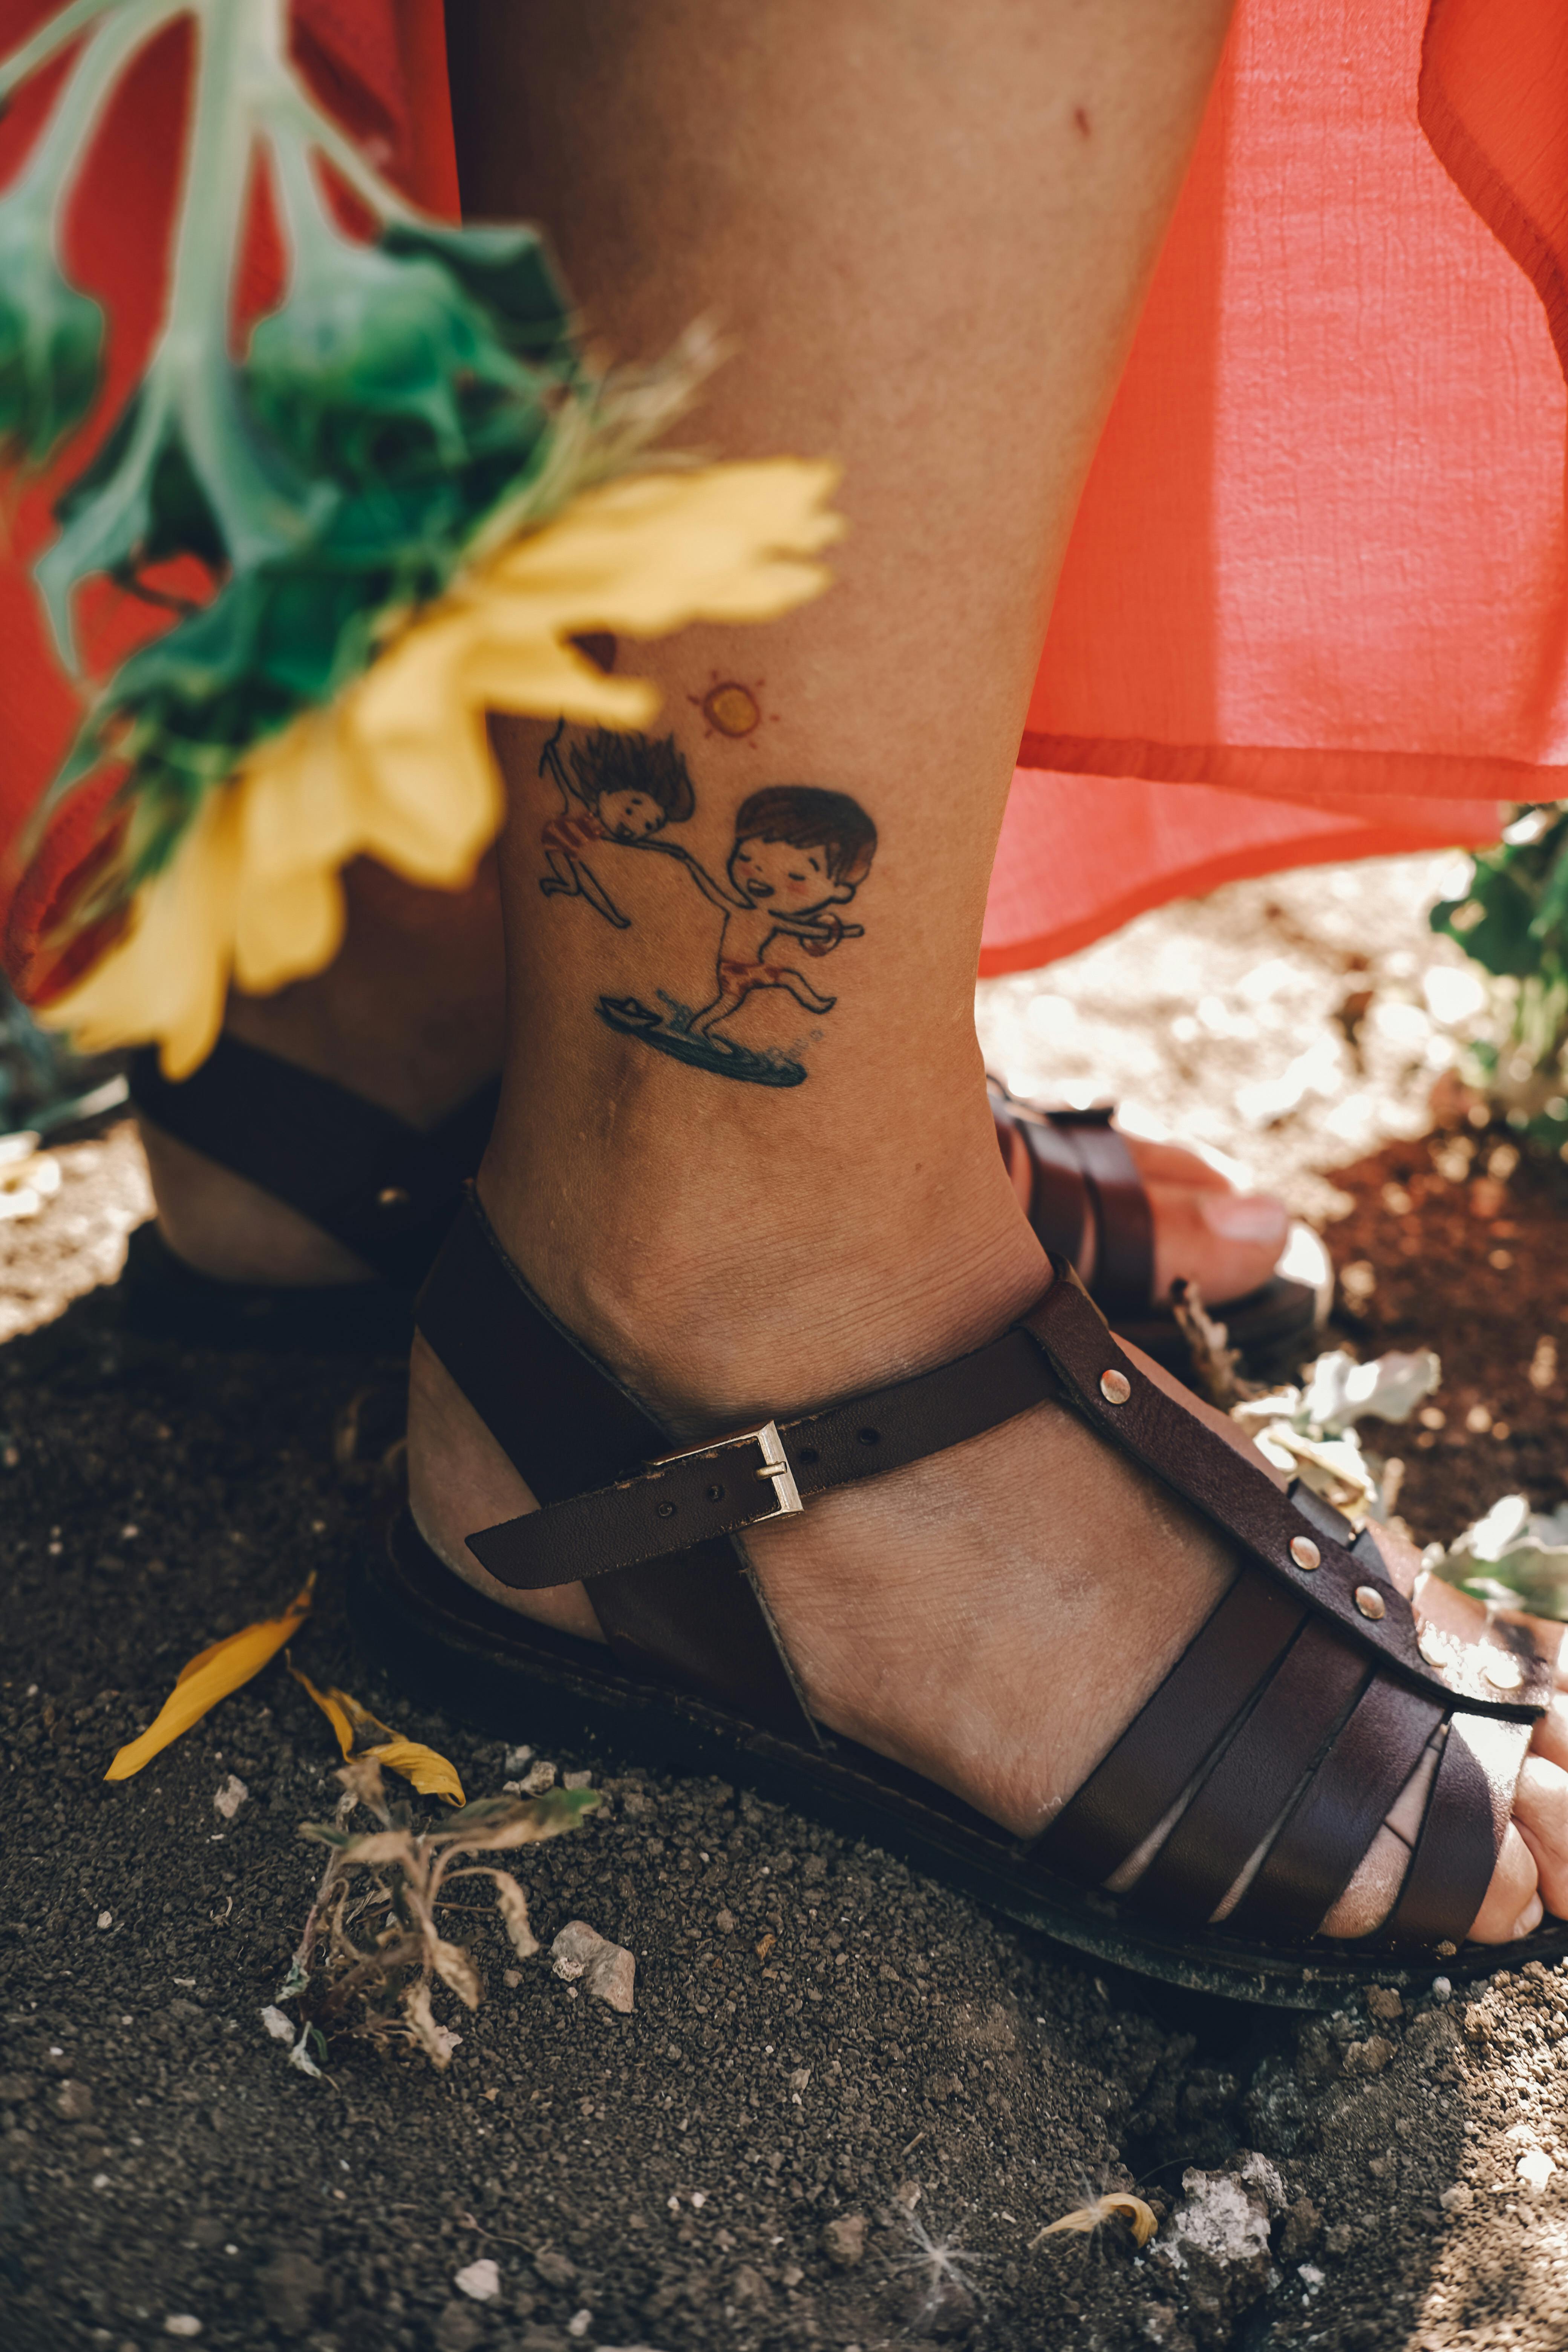 Ankle tattoos - Best Tattoo Ideas Gallery